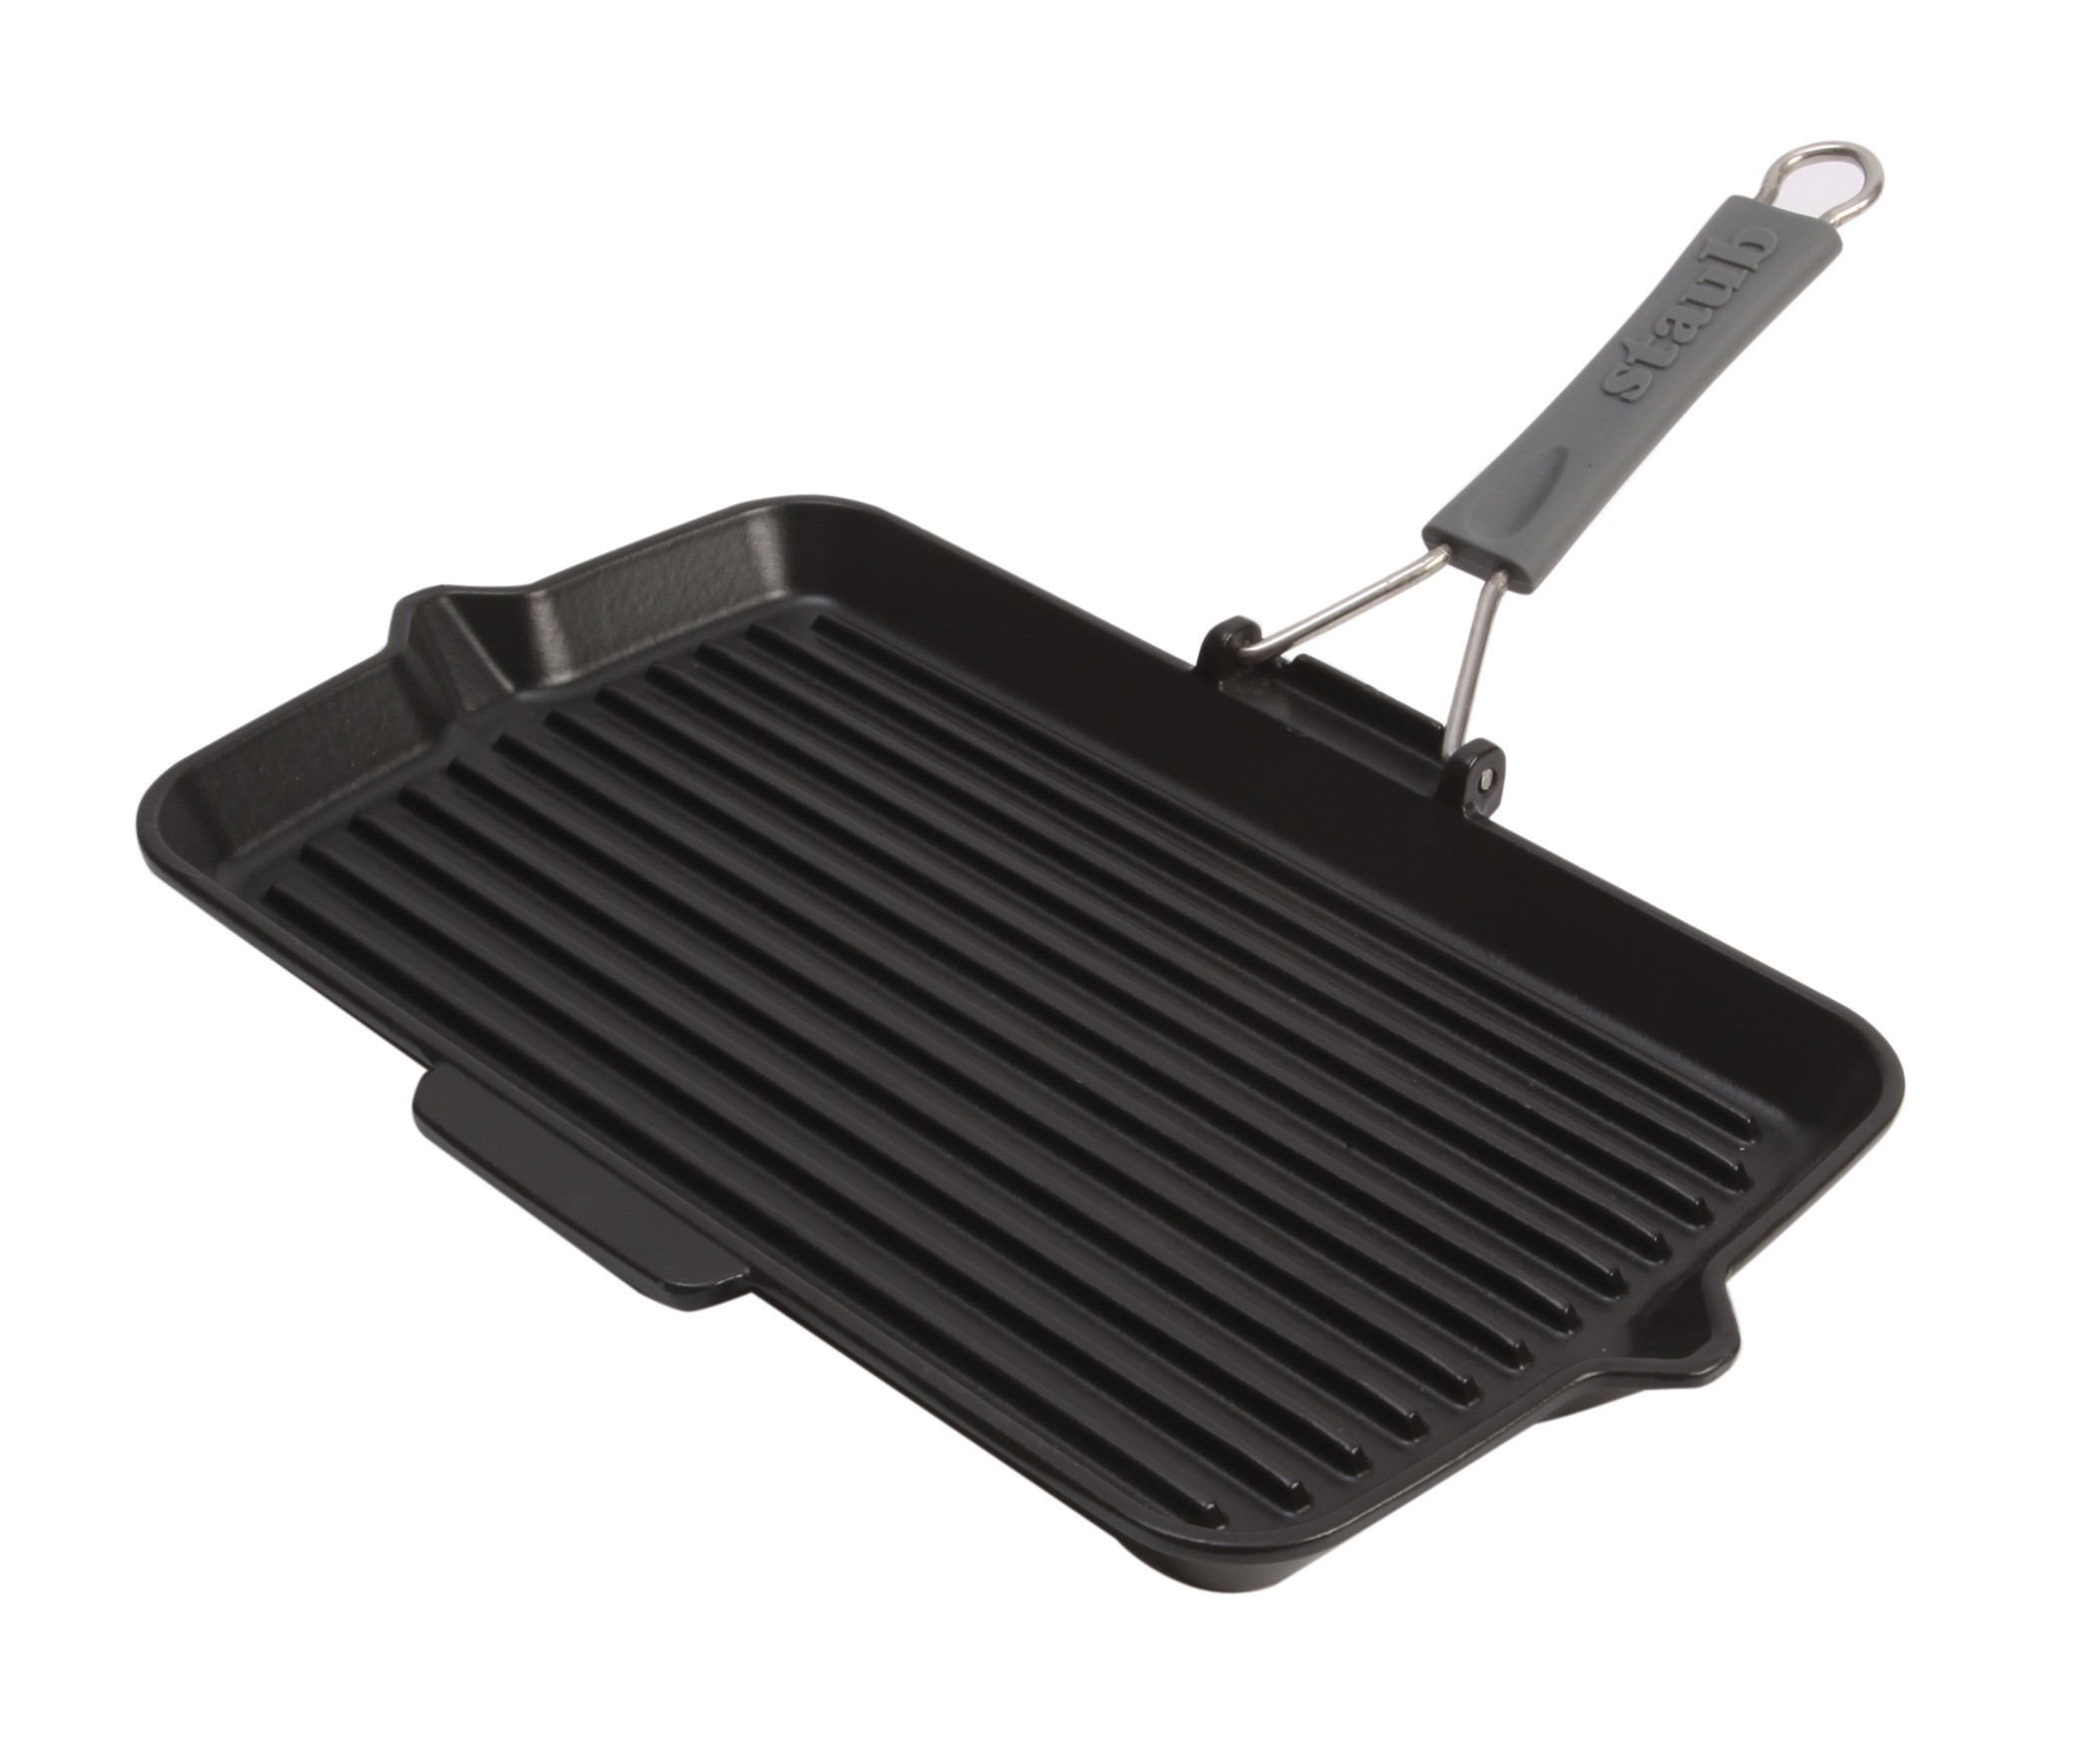 Staub: Grill pan, rectangular, 34 cm x 21 cm, black